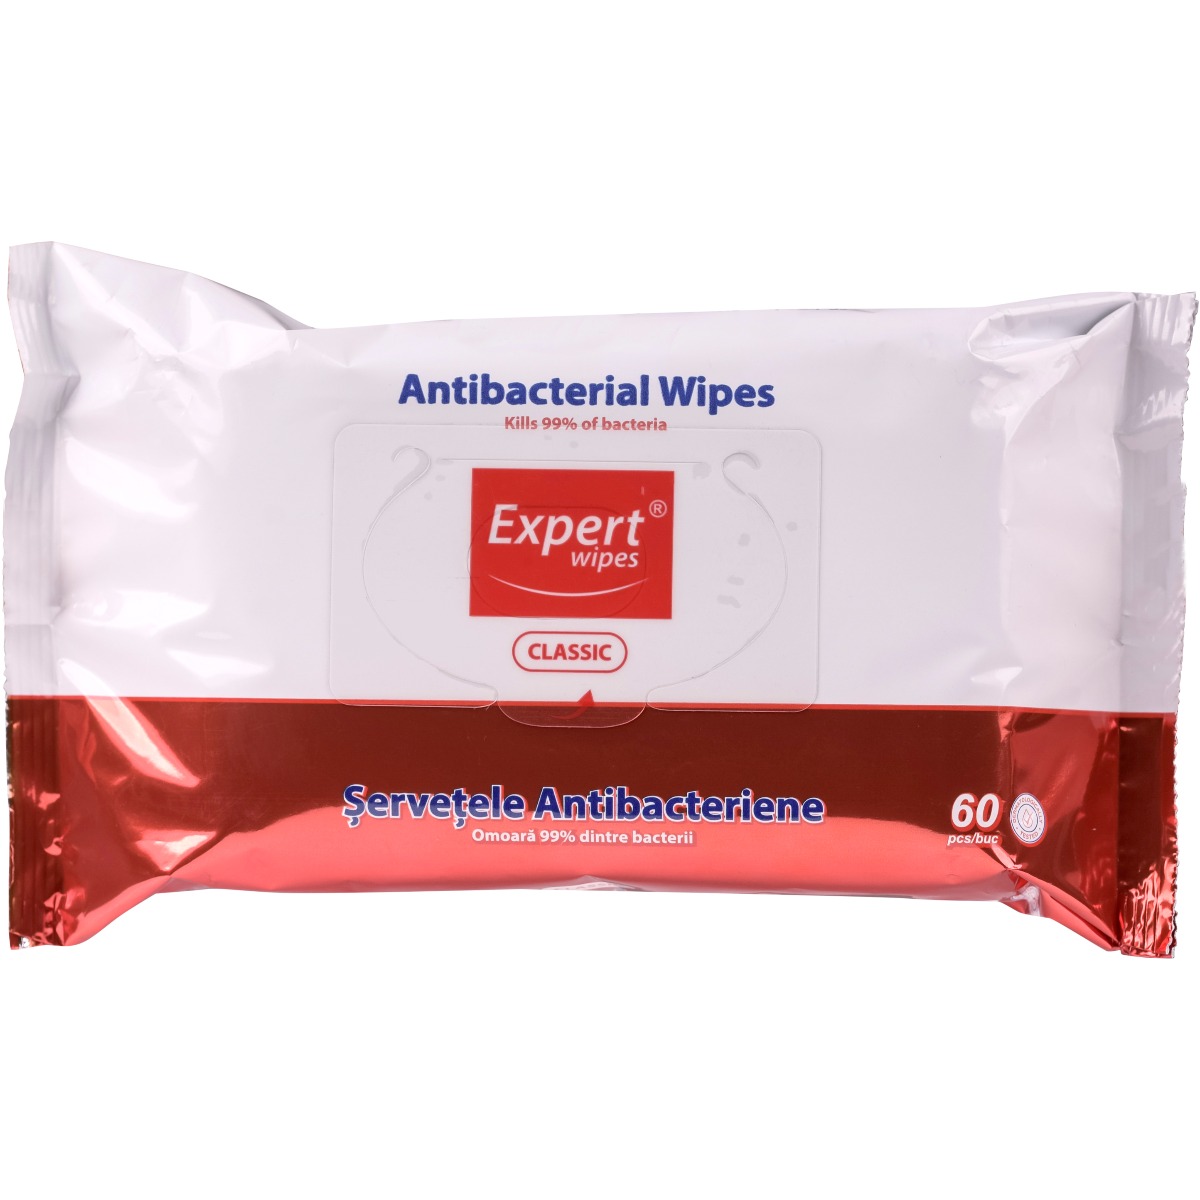 Servetele antibacteriene Expert Wipes Clasic, 60 buc antibacteriene